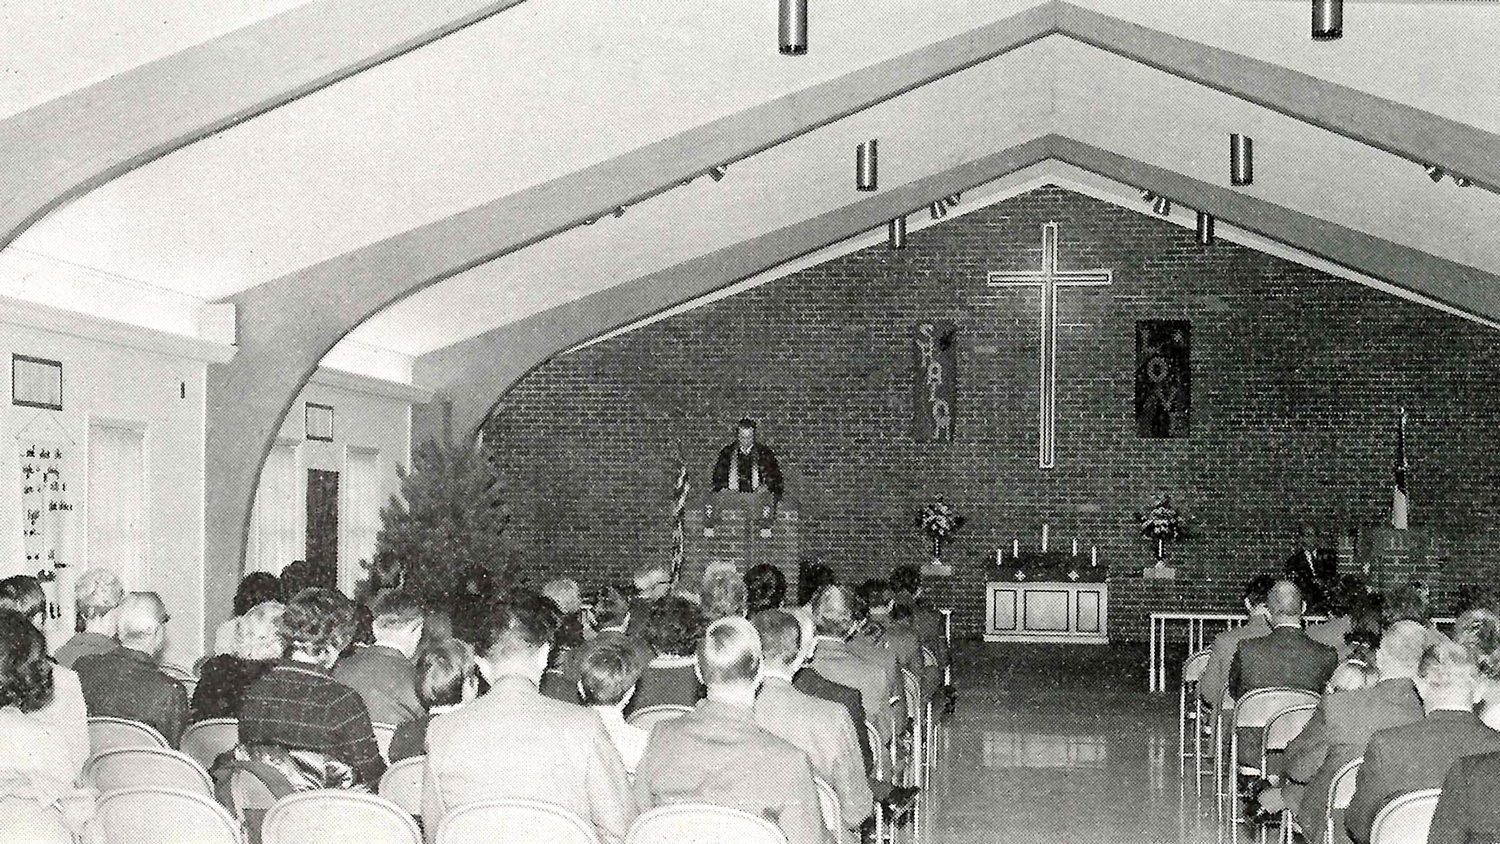 1972 sanctuary, now fellowship hall